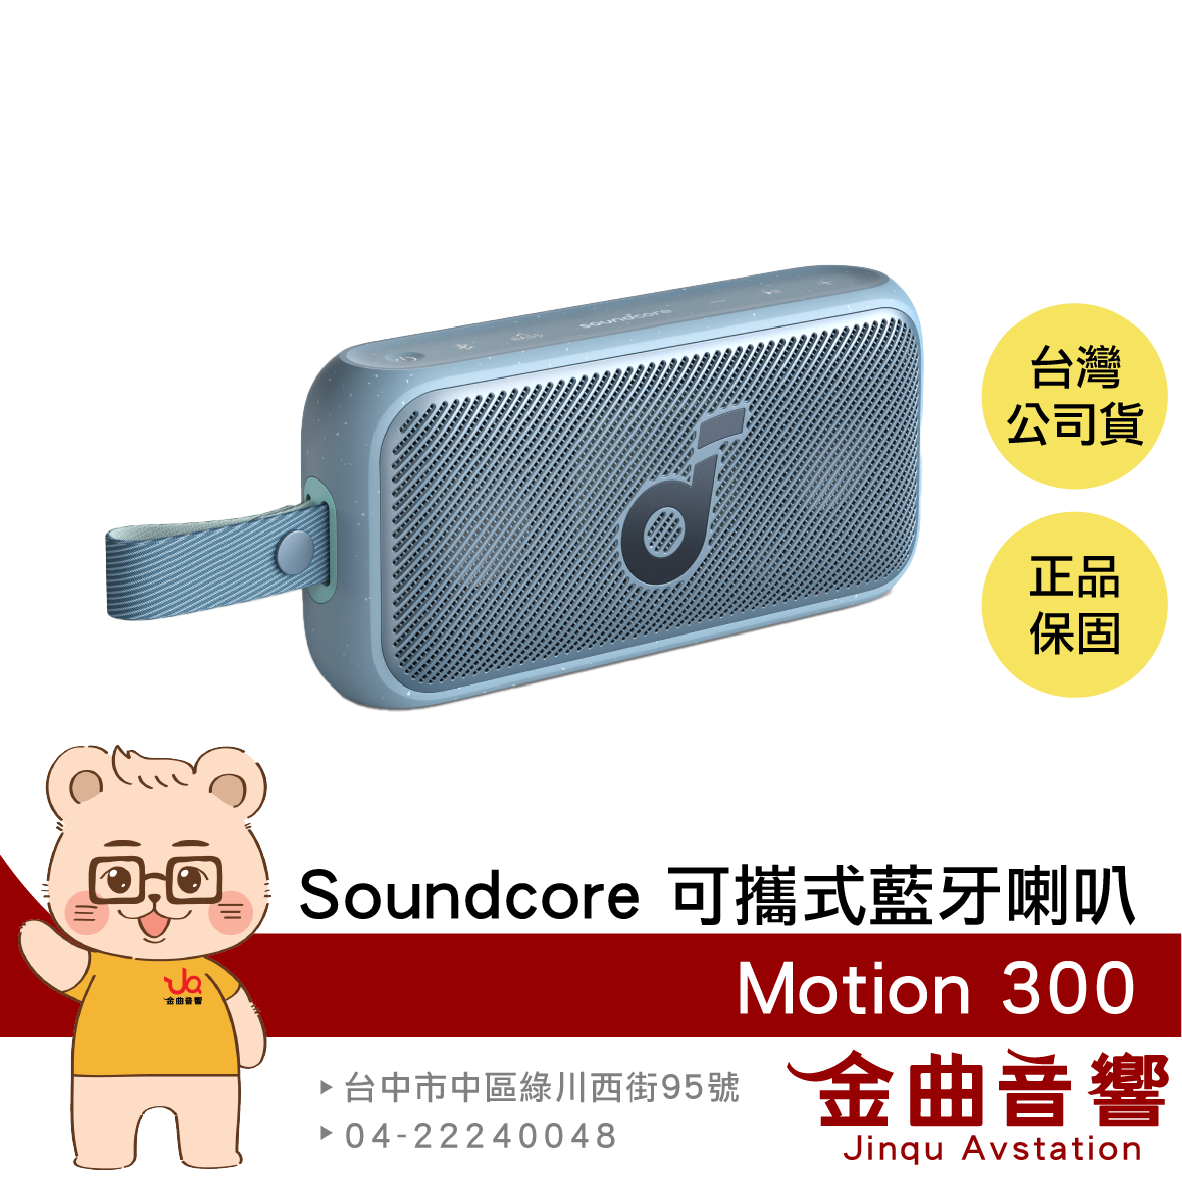 Anker Soundcore Motion 300 湖海藍 防水 IPX7 Hi-Res 可攜式藍牙喇叭 | 金曲音響